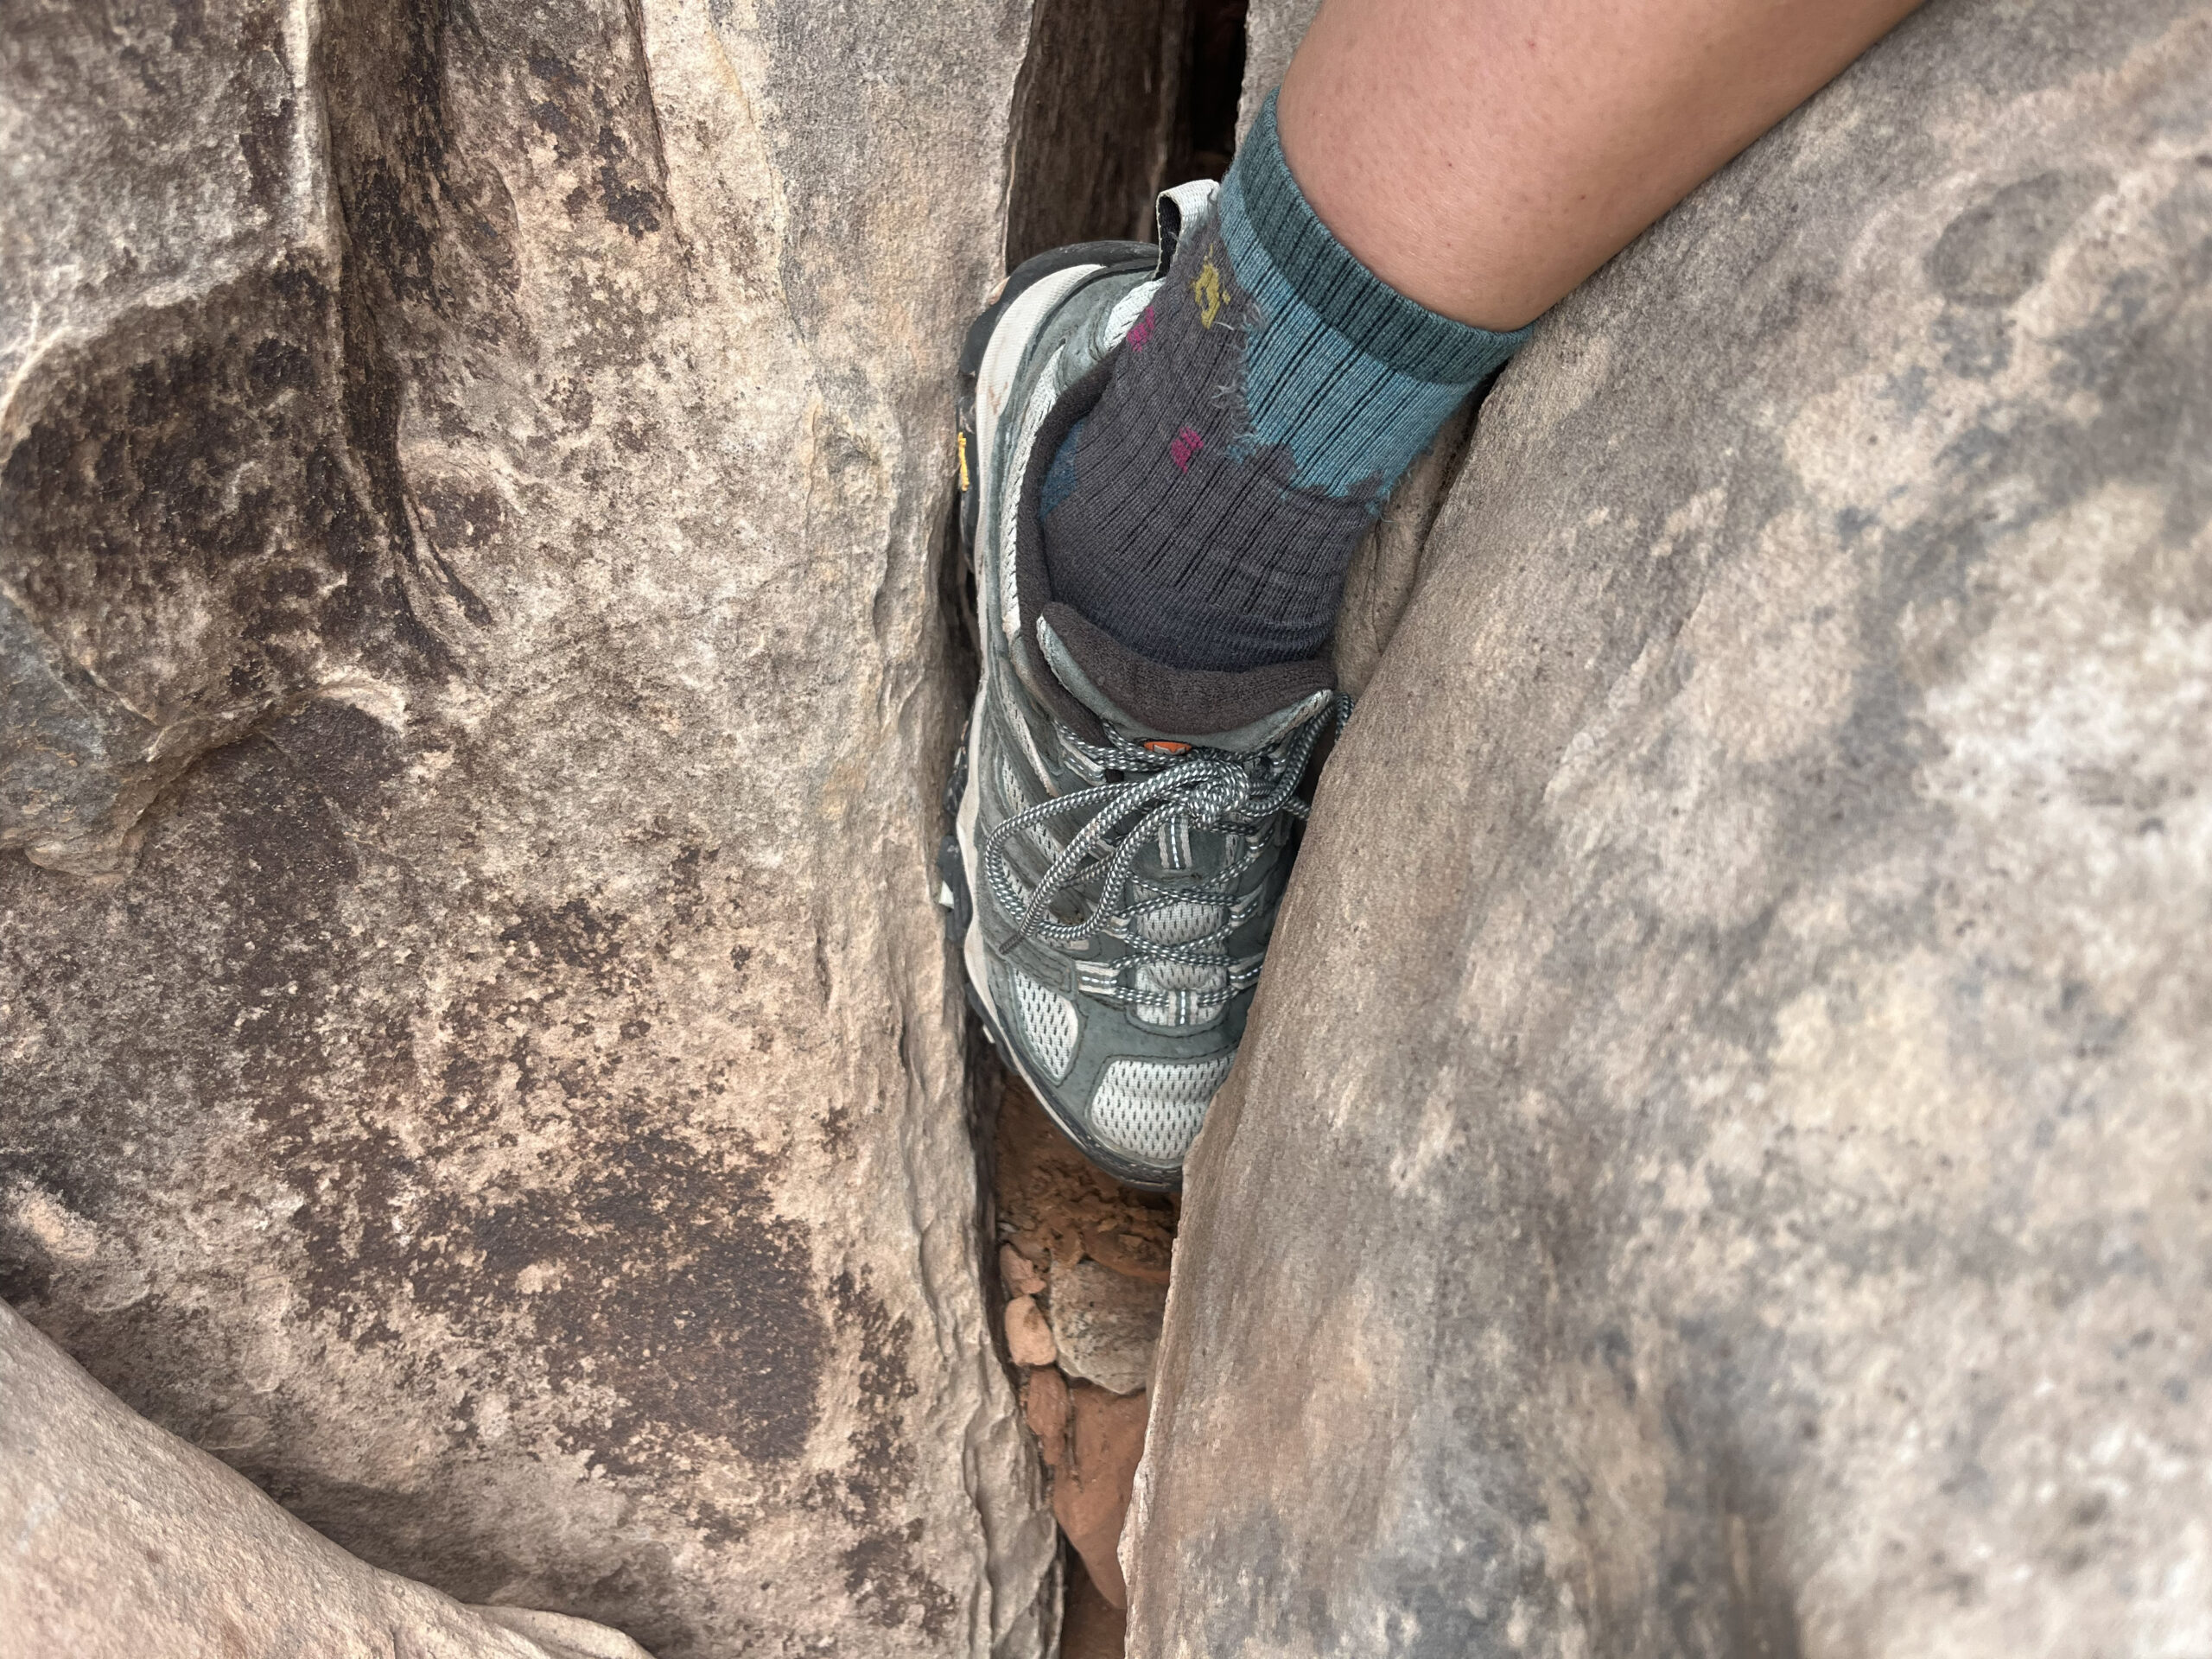 Author jams Moabs into tight crevasses.